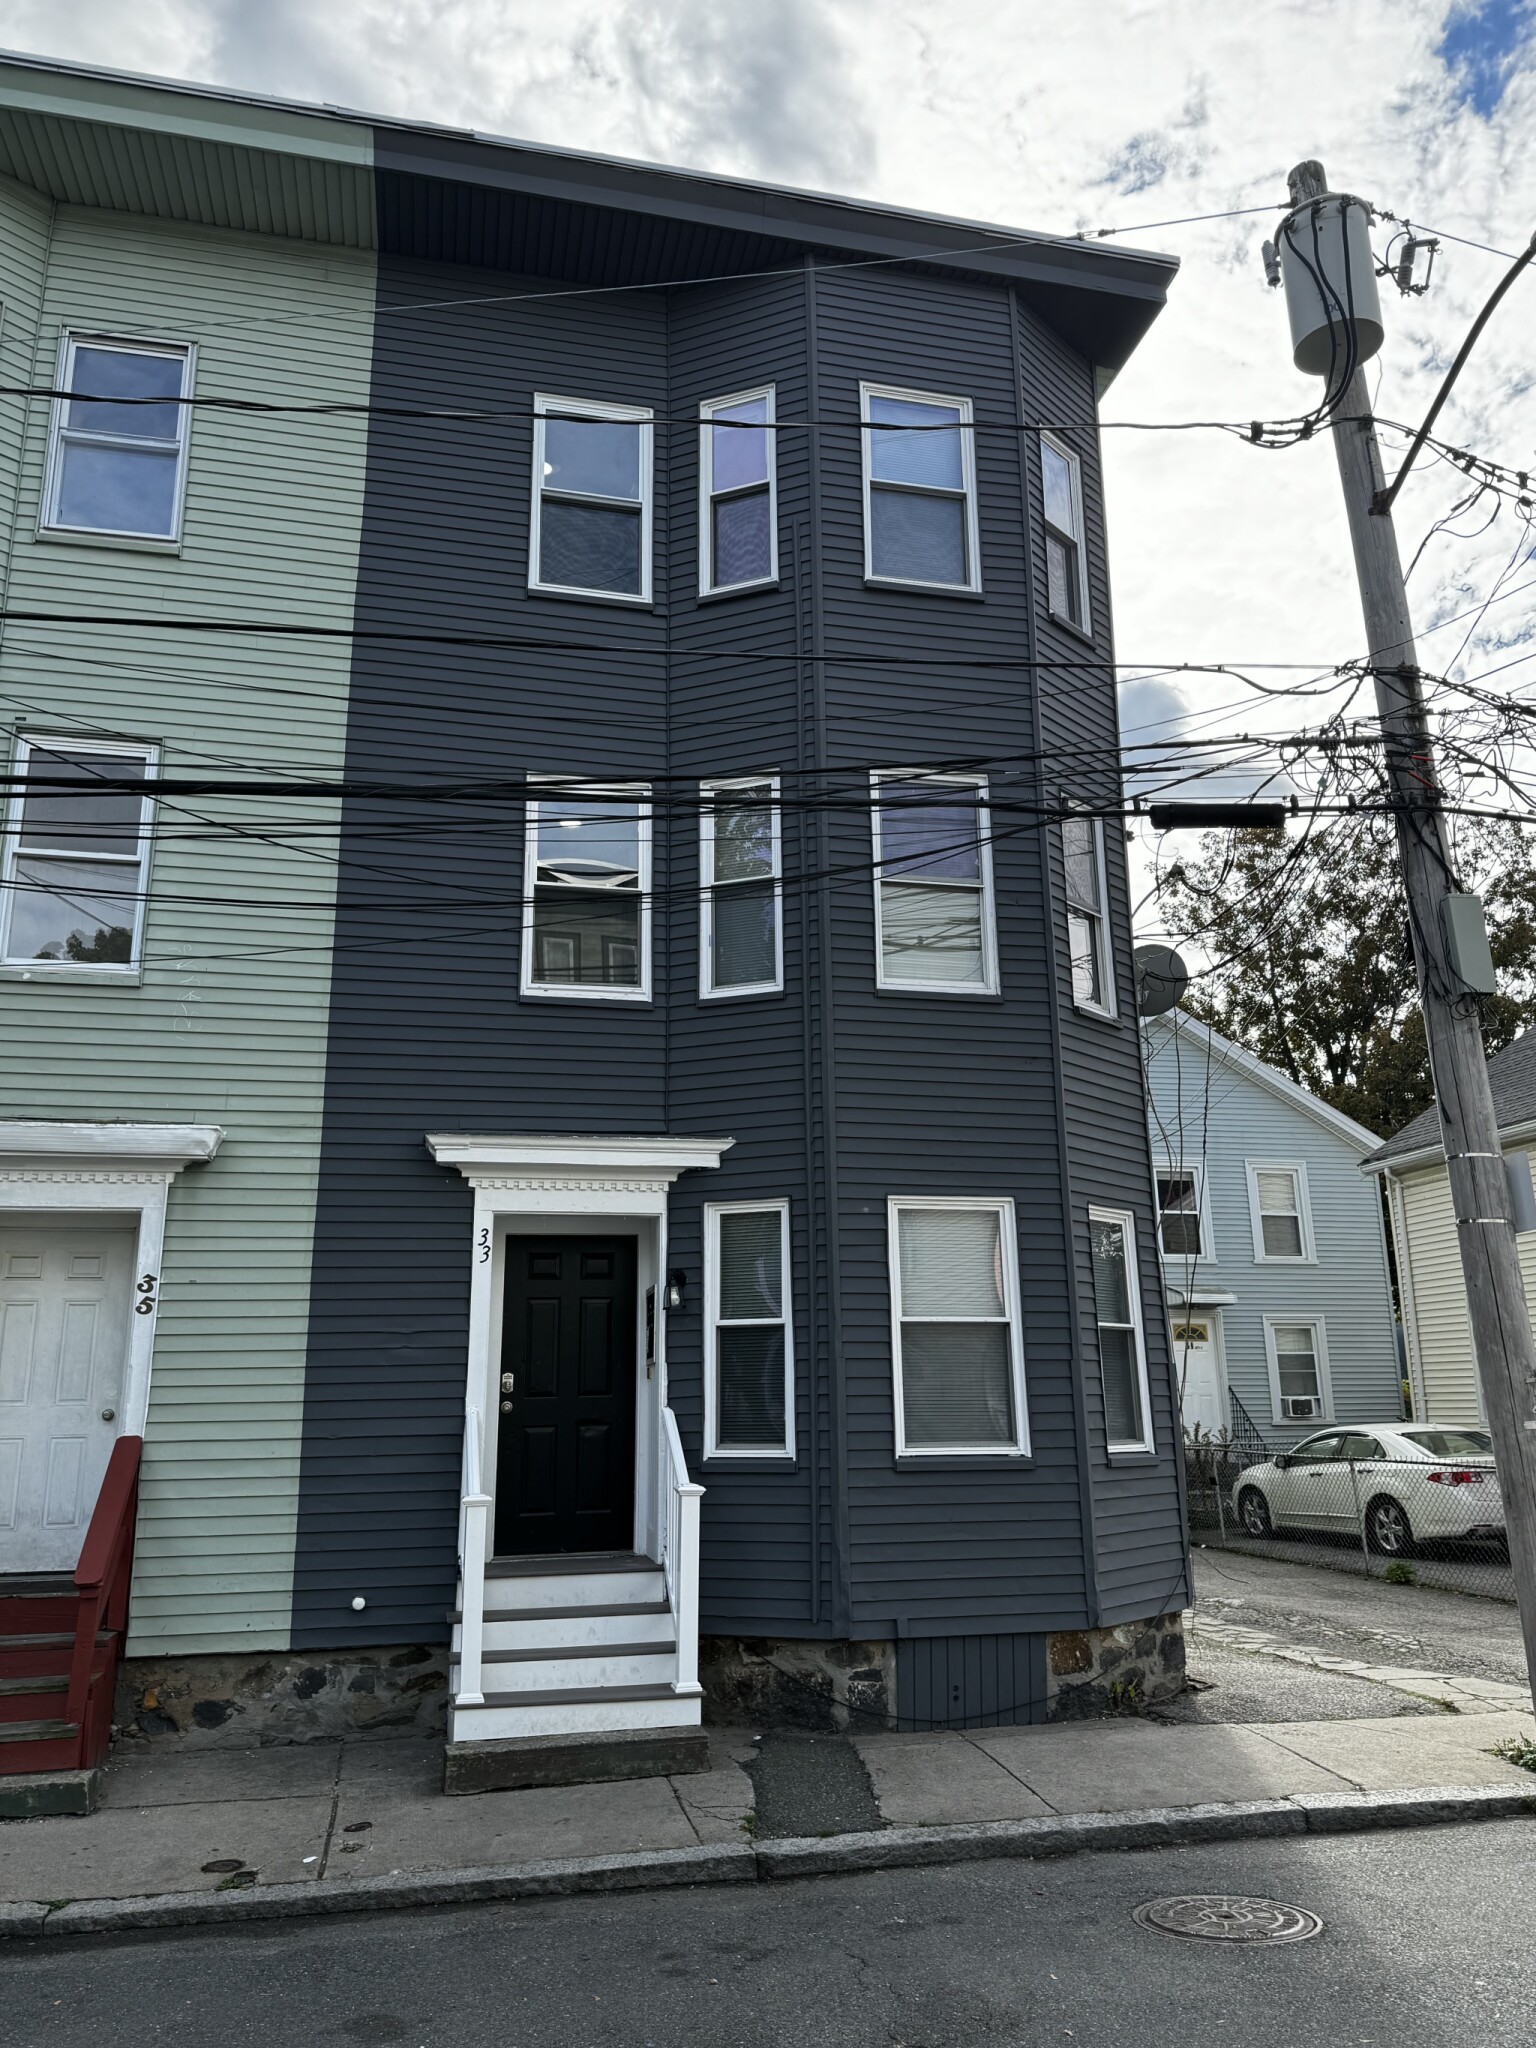 Photos of apartment on Haskell,Boston MA 02134